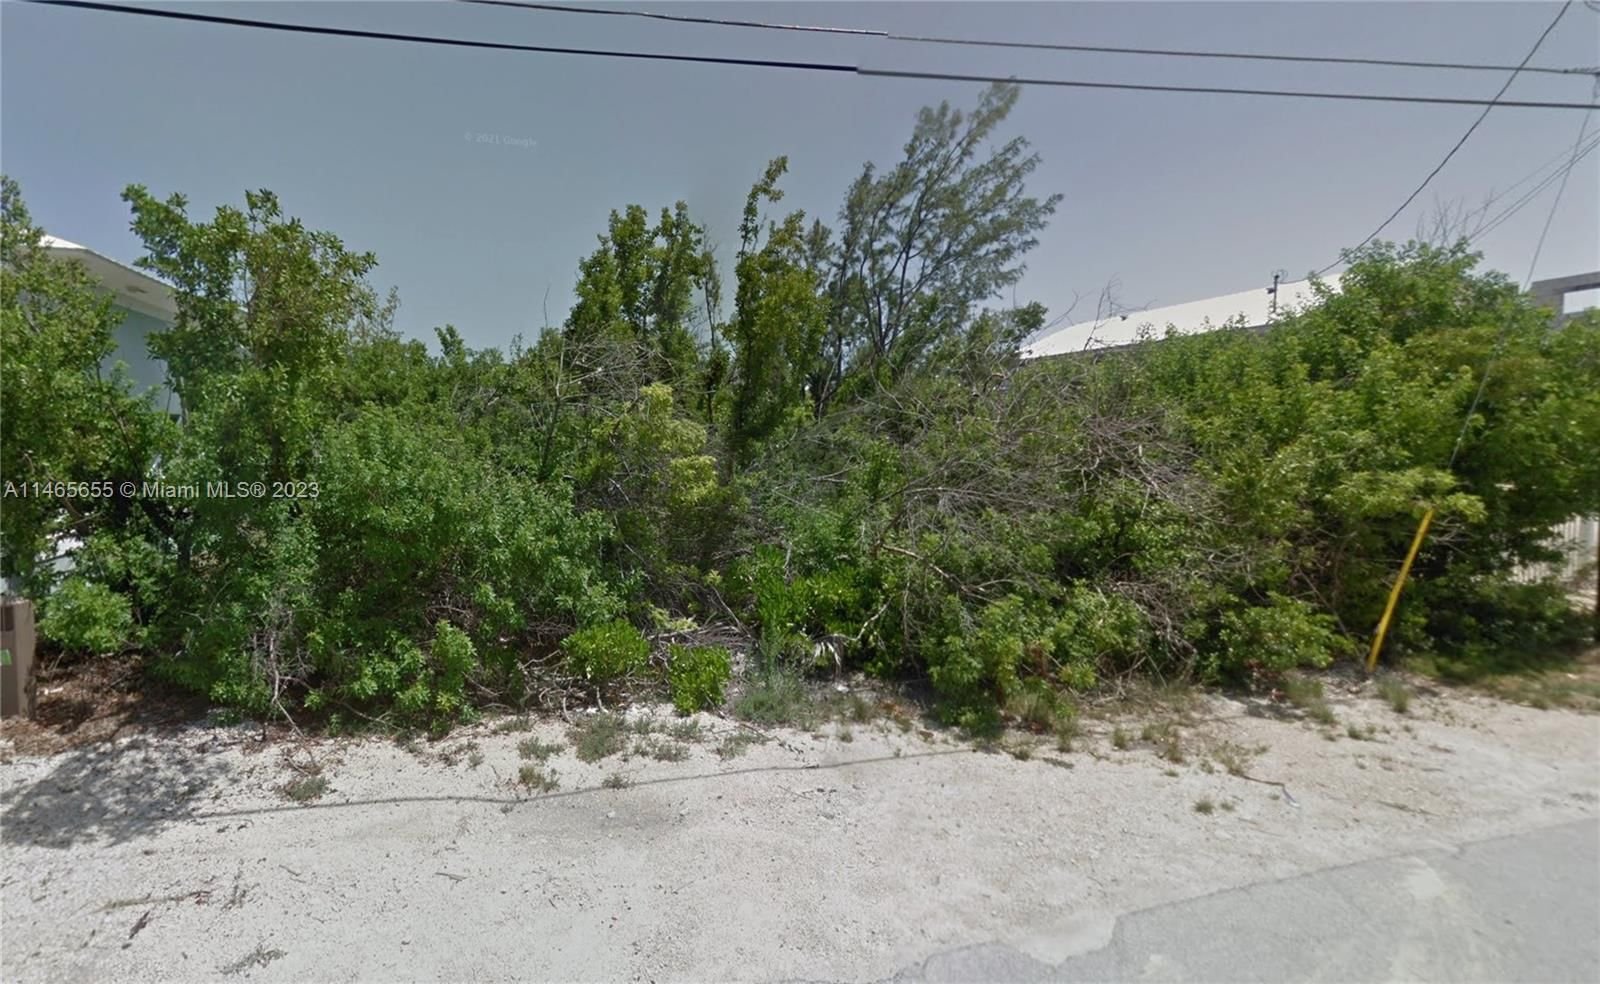 Real estate property located at 115 Ocean Shores Dr, Monroe County, KEY LARGO OCEAN SHORES AD, Key Largo, FL